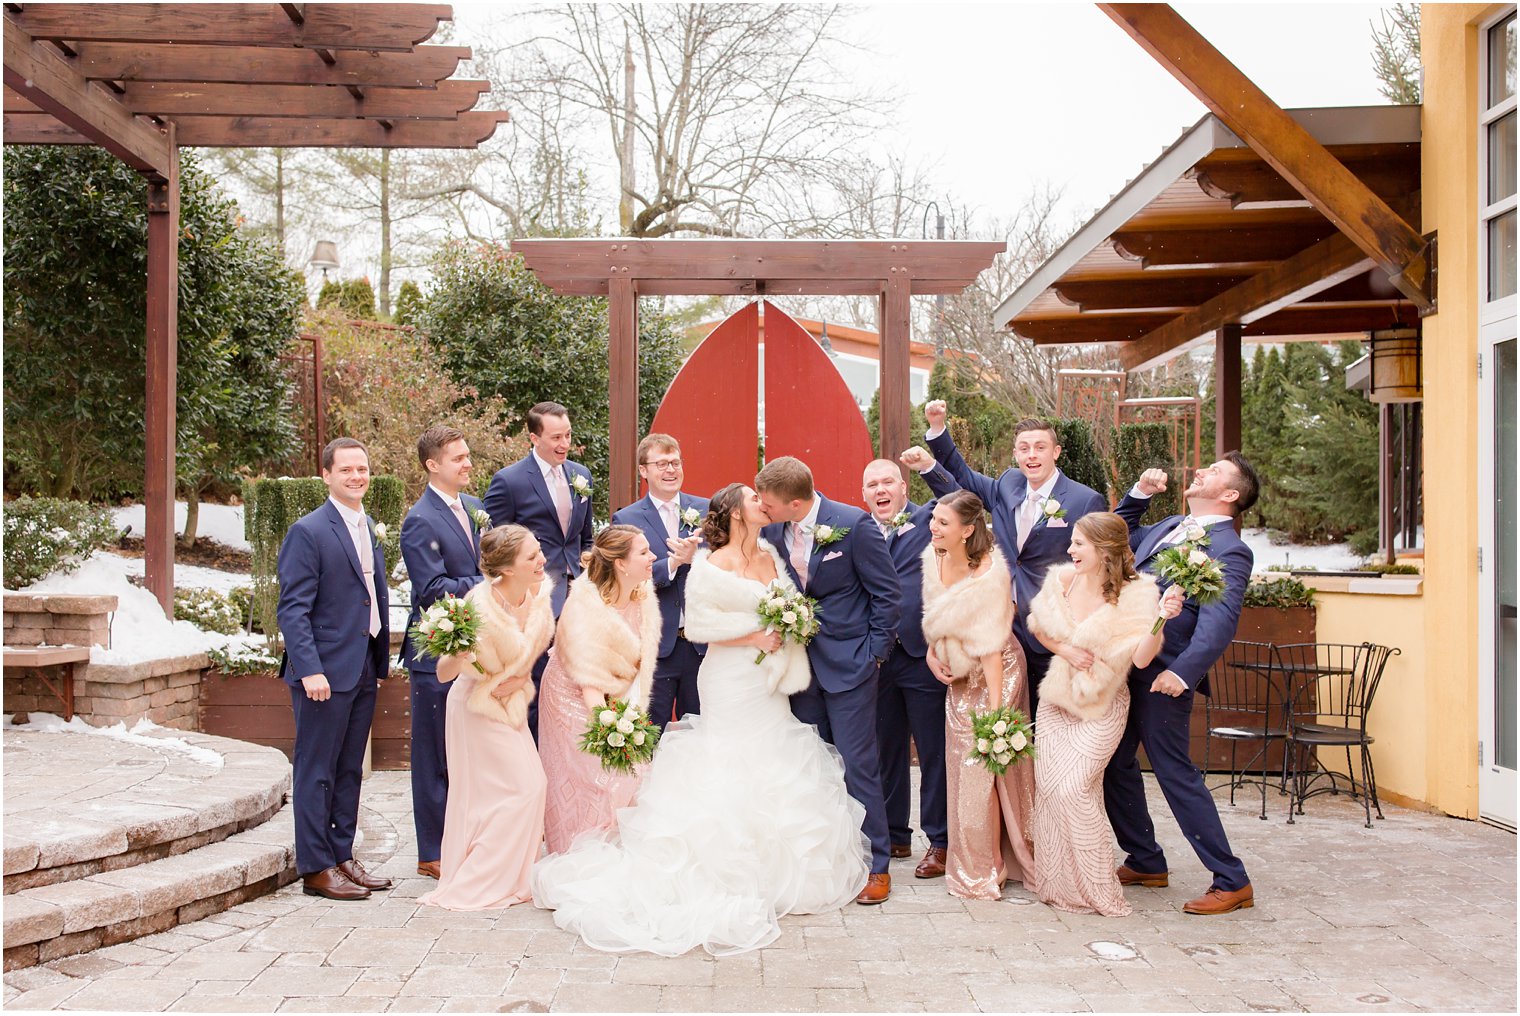 Joyful photo of bridal party at Stone House at Stirling Ridge in Warren, NJ